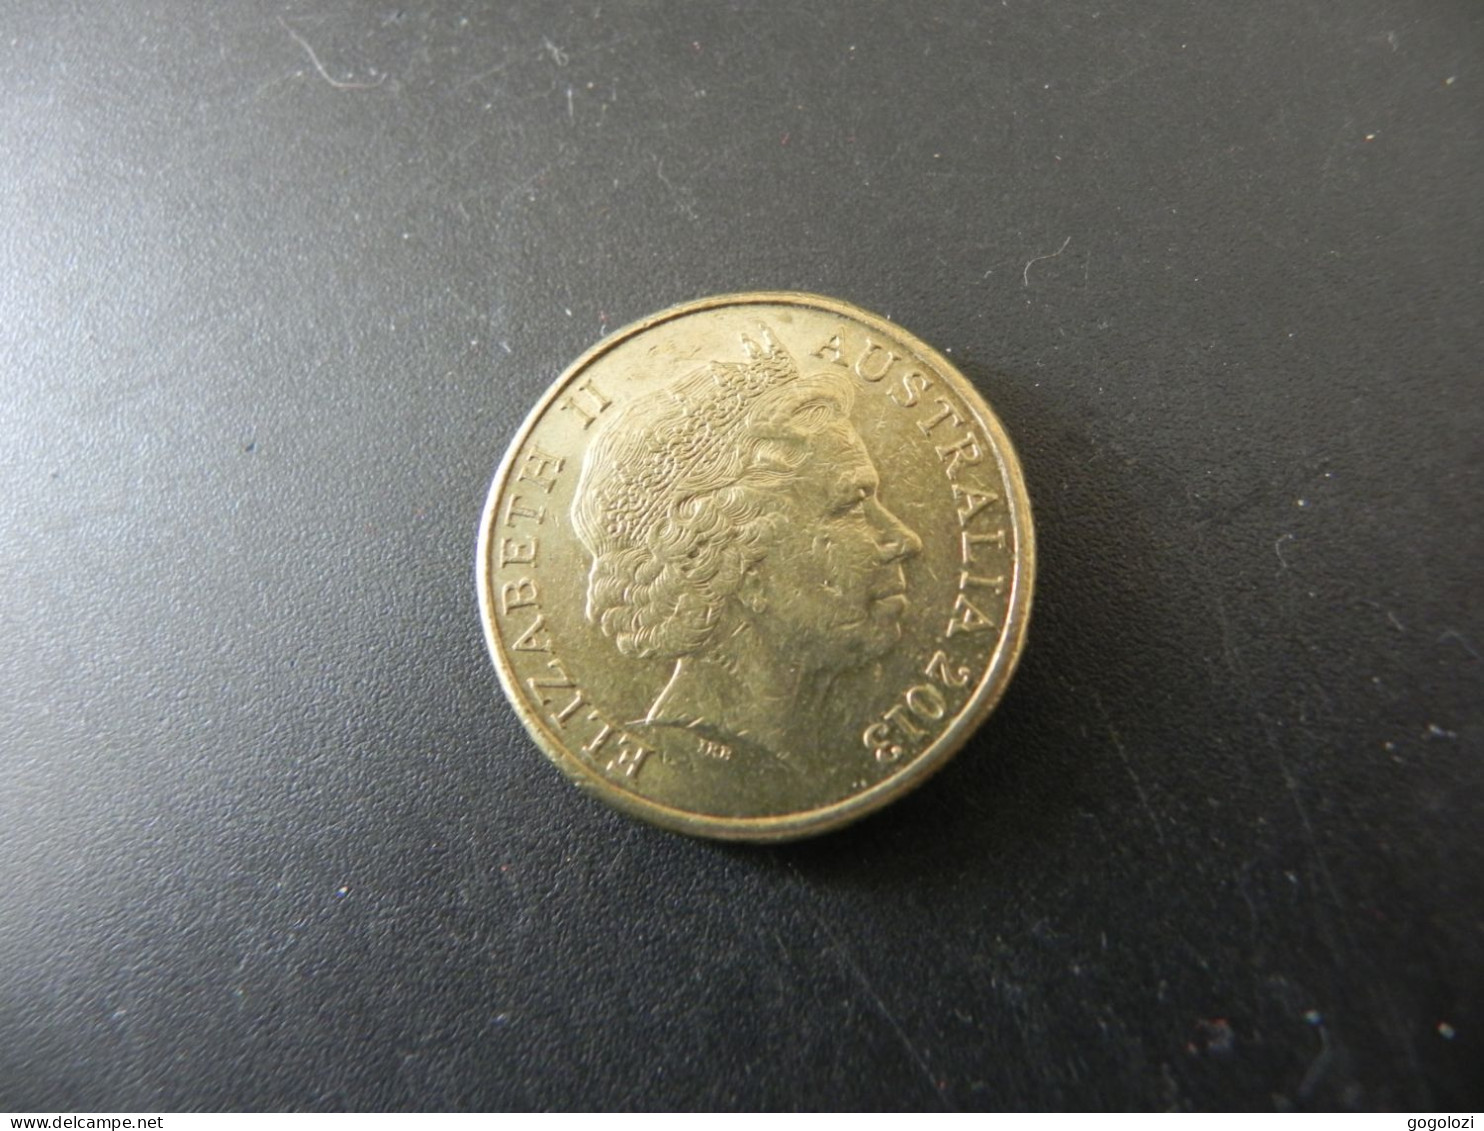 Australia 1 Dollar 2013 - Dollar